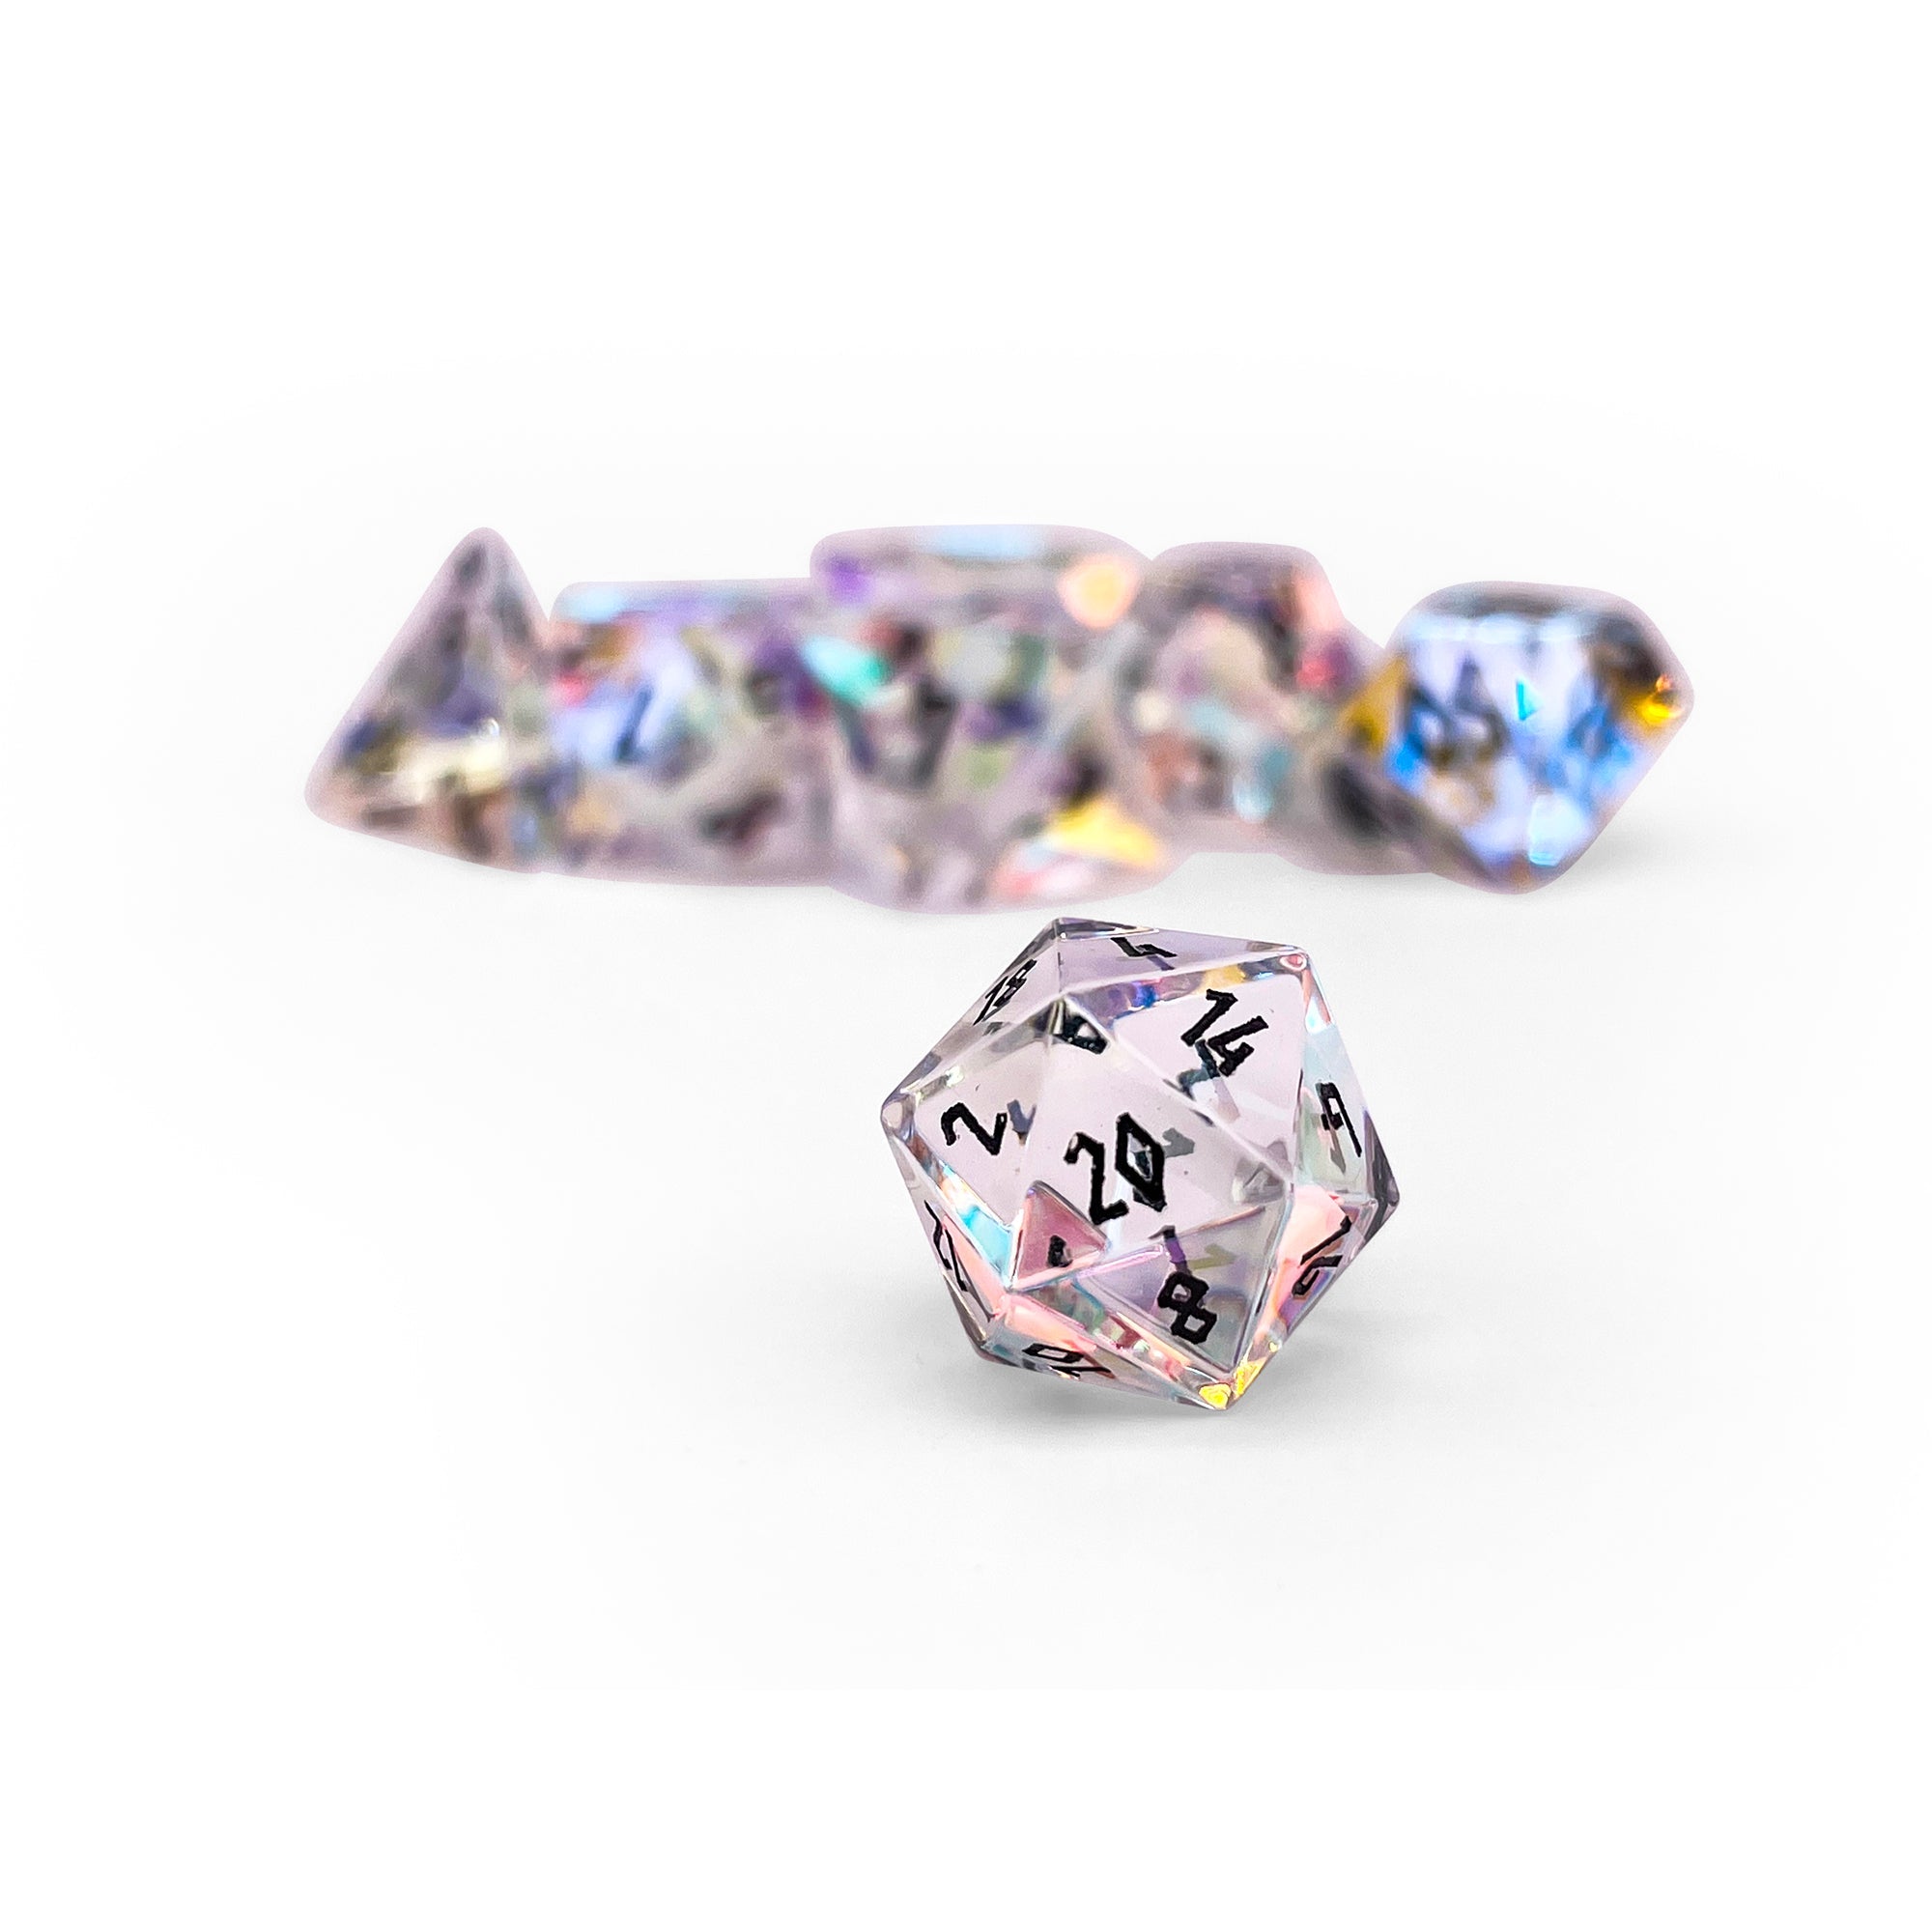 K9 Rainbow Glass - Pebble RPG Set Glass Dice - NOR 01541